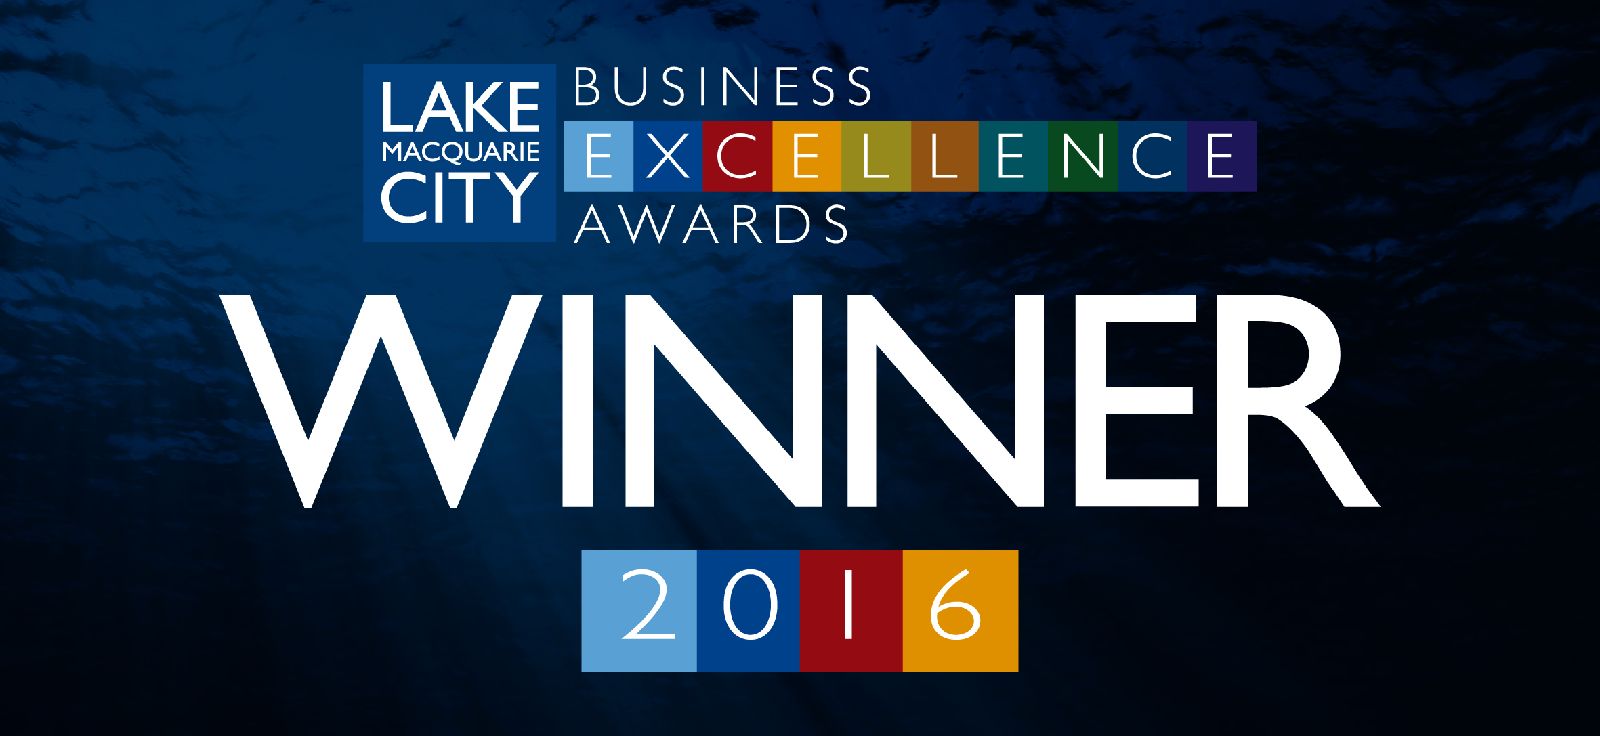 Business Excellence Awards winner